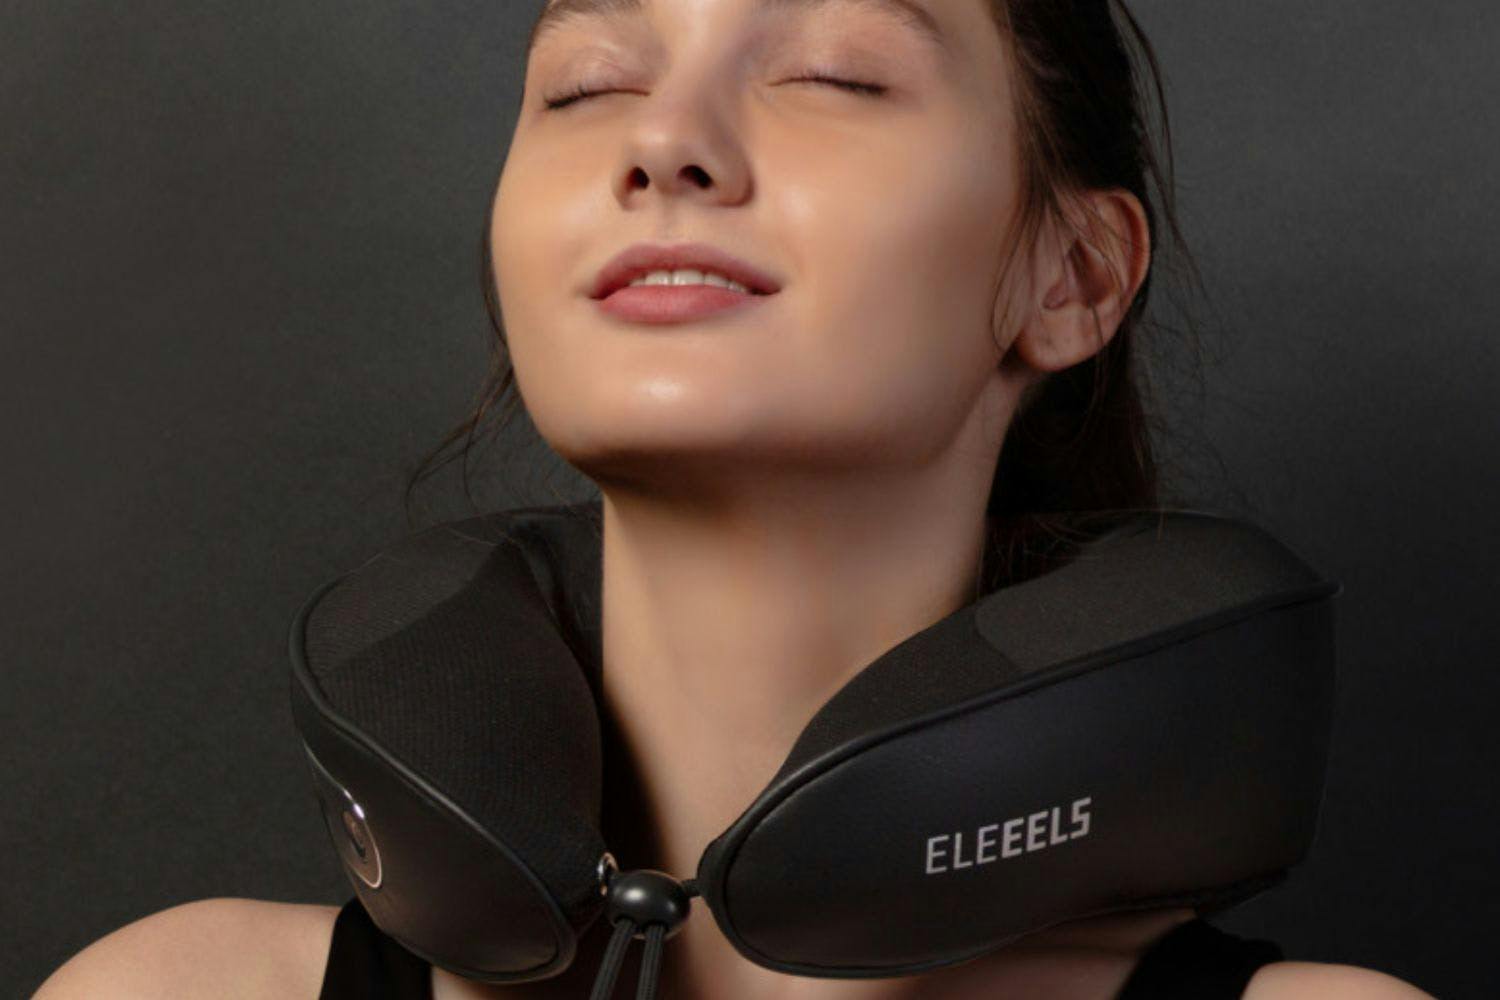 Eleeels R5 / Neck Care Massager